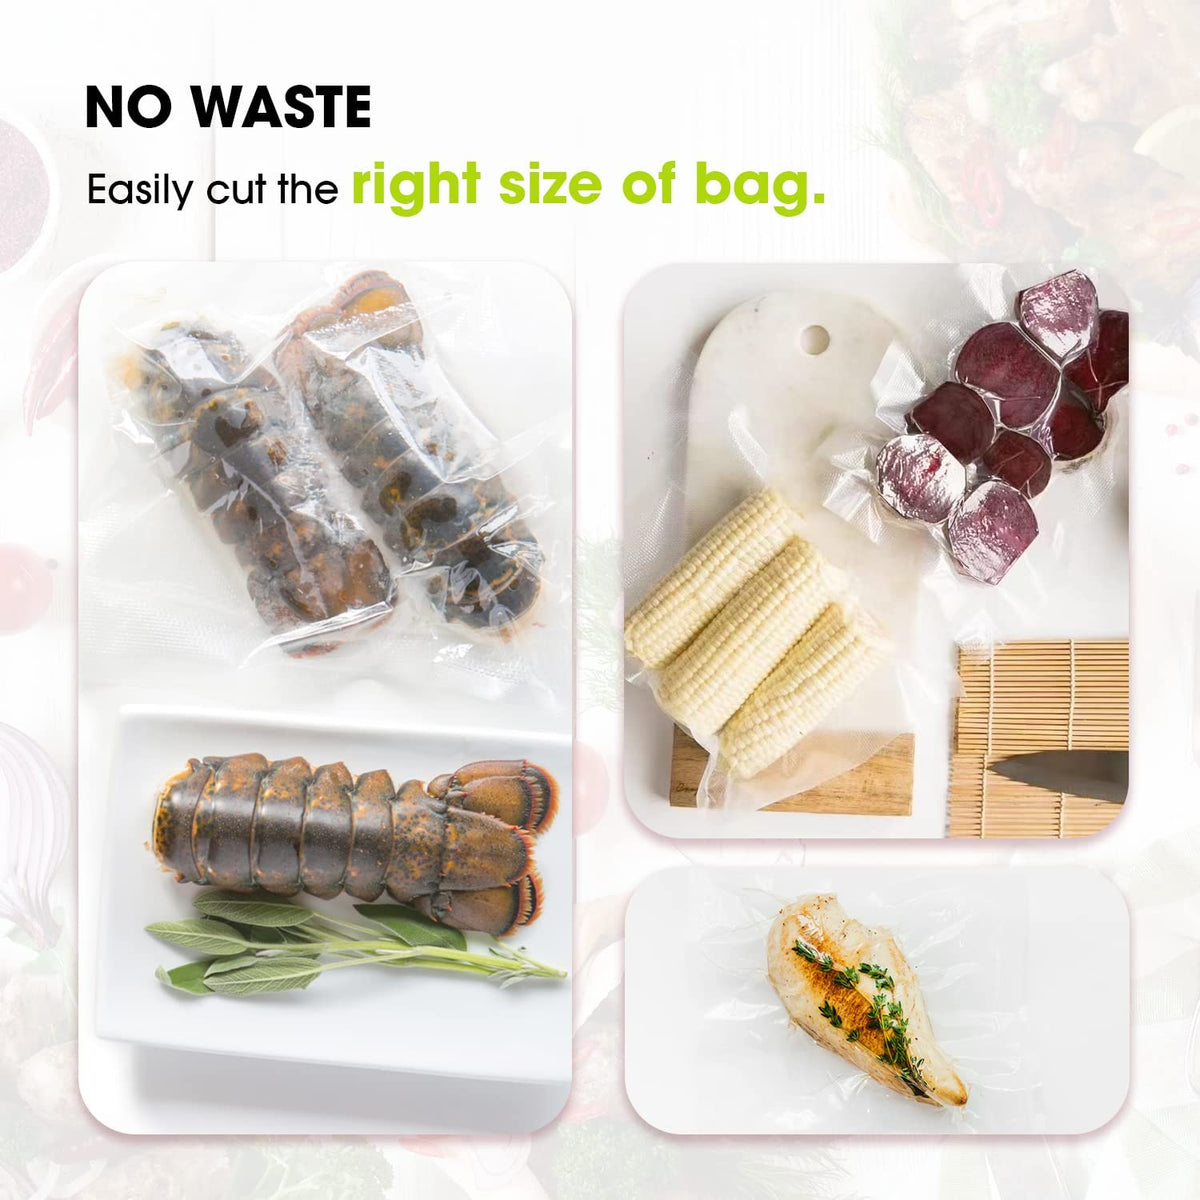 Vacuum Sealer Plastic Storage Bag - Vacuum Seal Bags Food Rolls